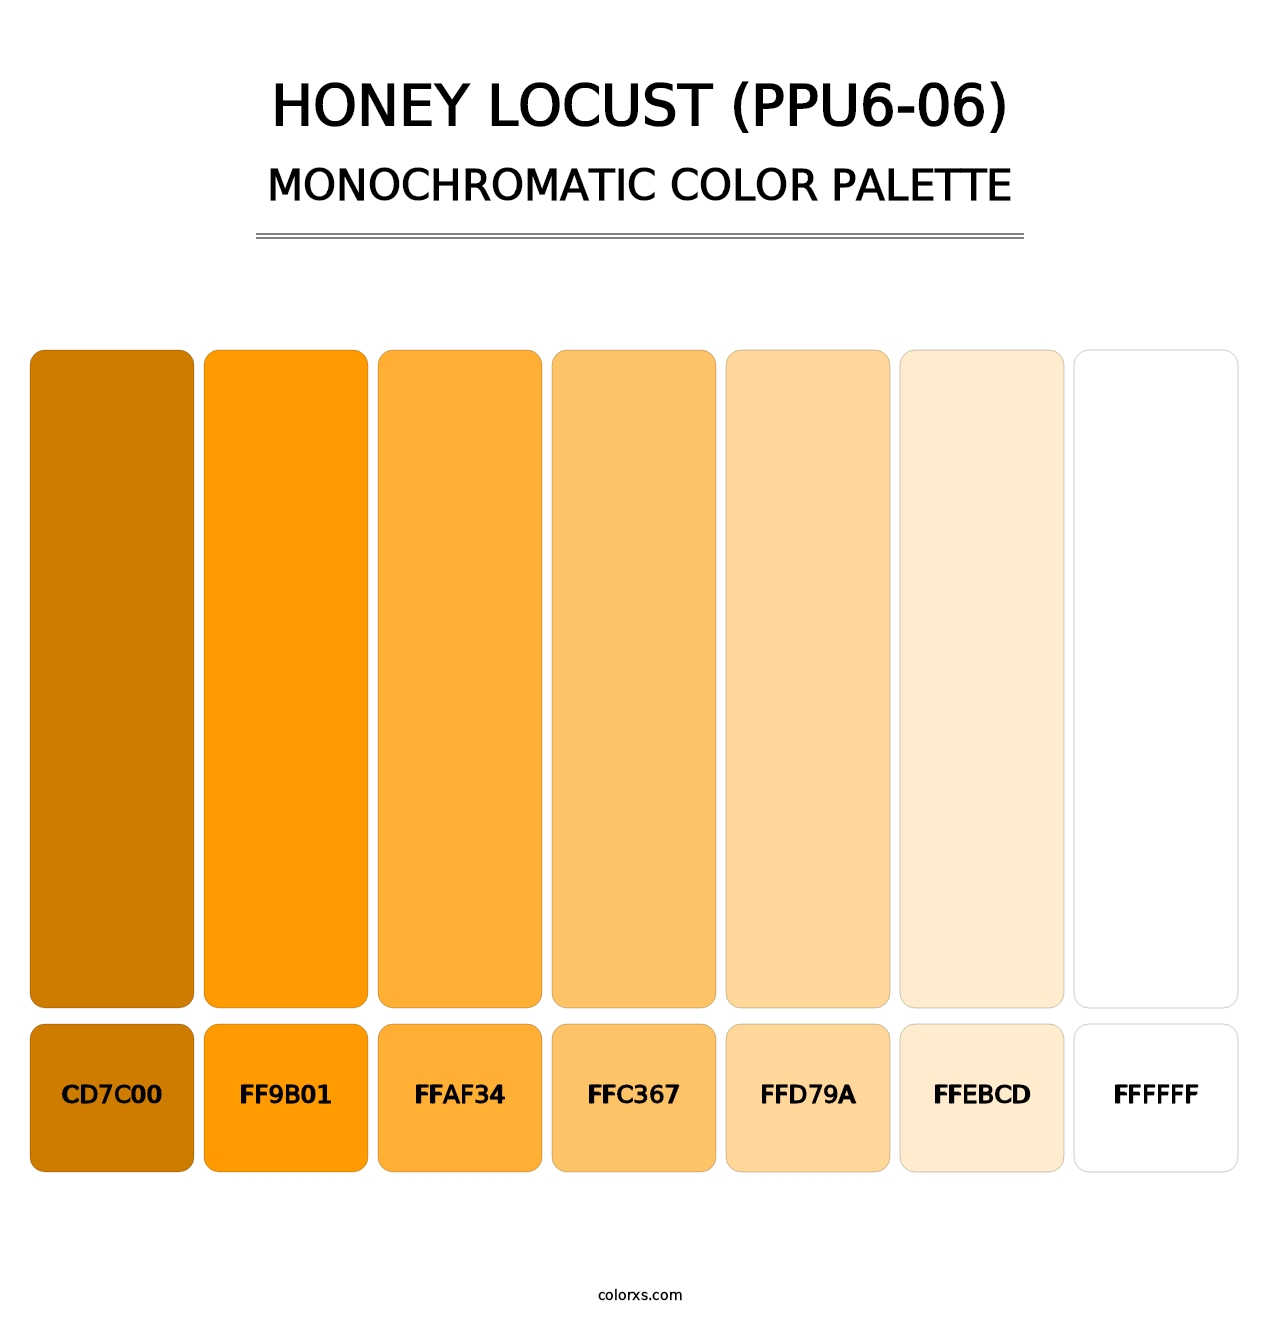 Honey Locust (PPU6-06) - Monochromatic Color Palette